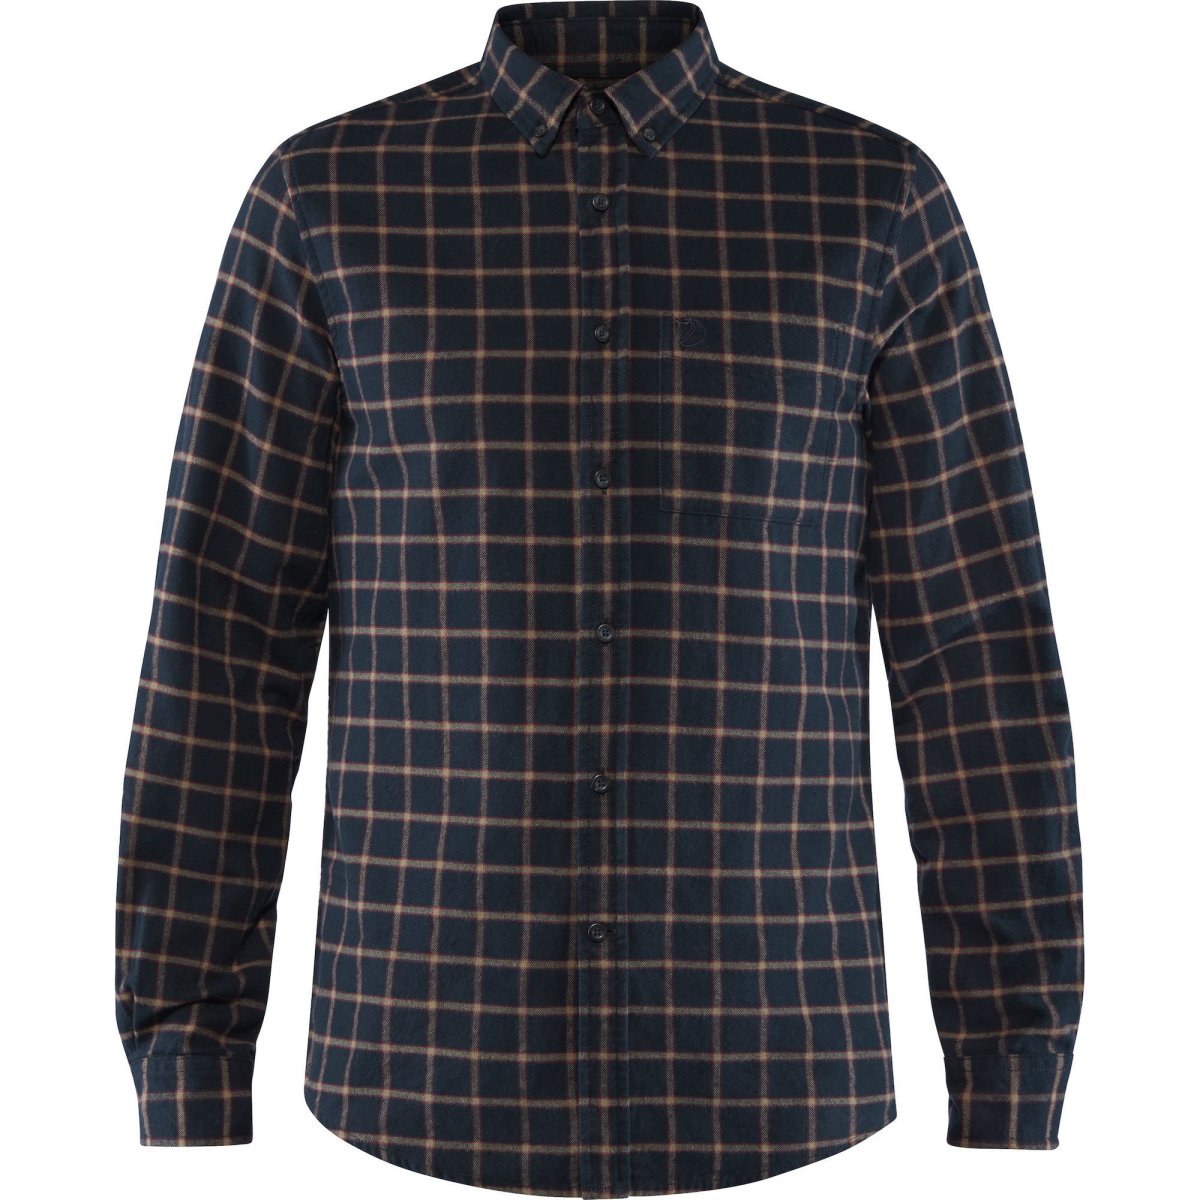 Fj&auml;llr&auml;ven &Ouml;vik Flannel Shirt  82979 dark navy Herrenhemd Outdoorhemd Hemd